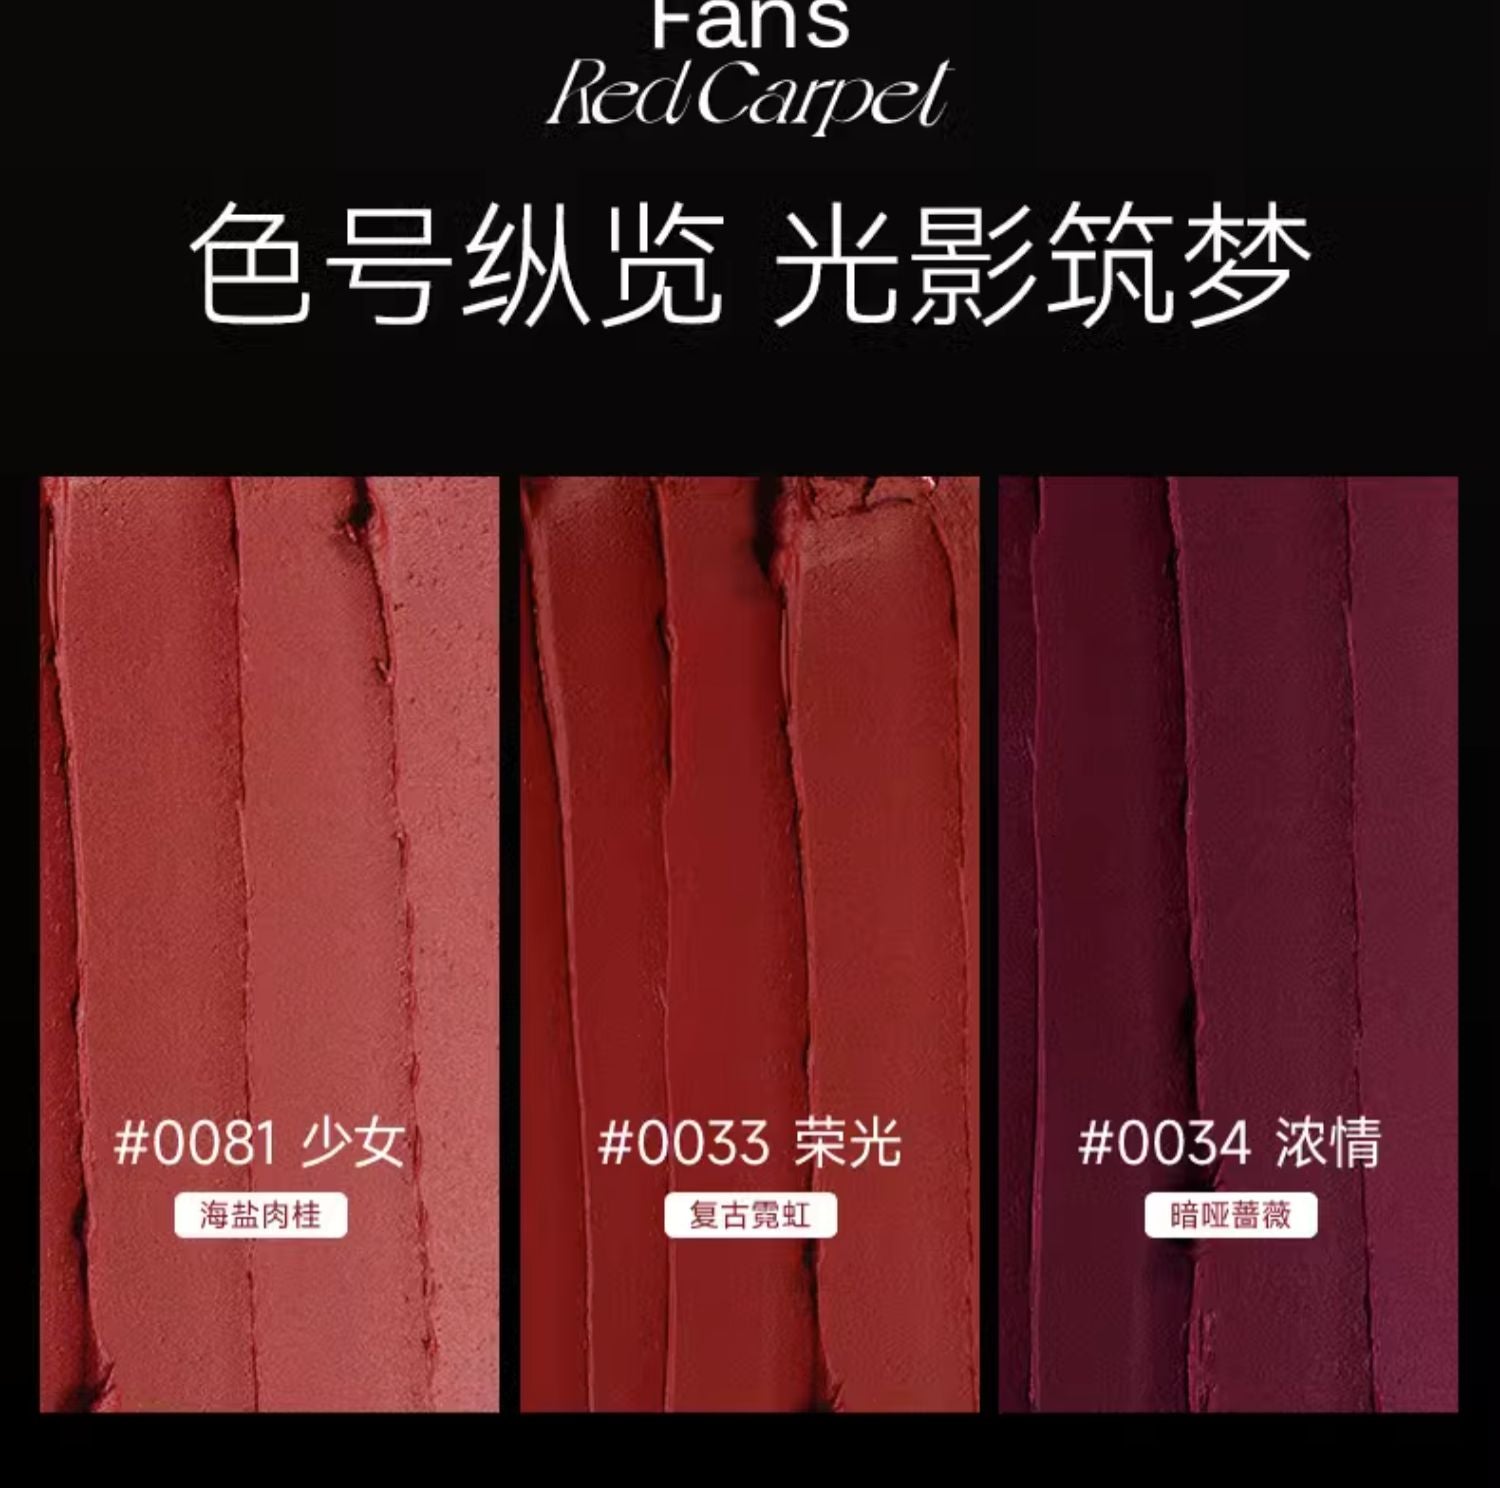 Fan Beauty Red Carpet Lipstick 3.5g 范冰冰同款银镜迷踪红毯唇膏